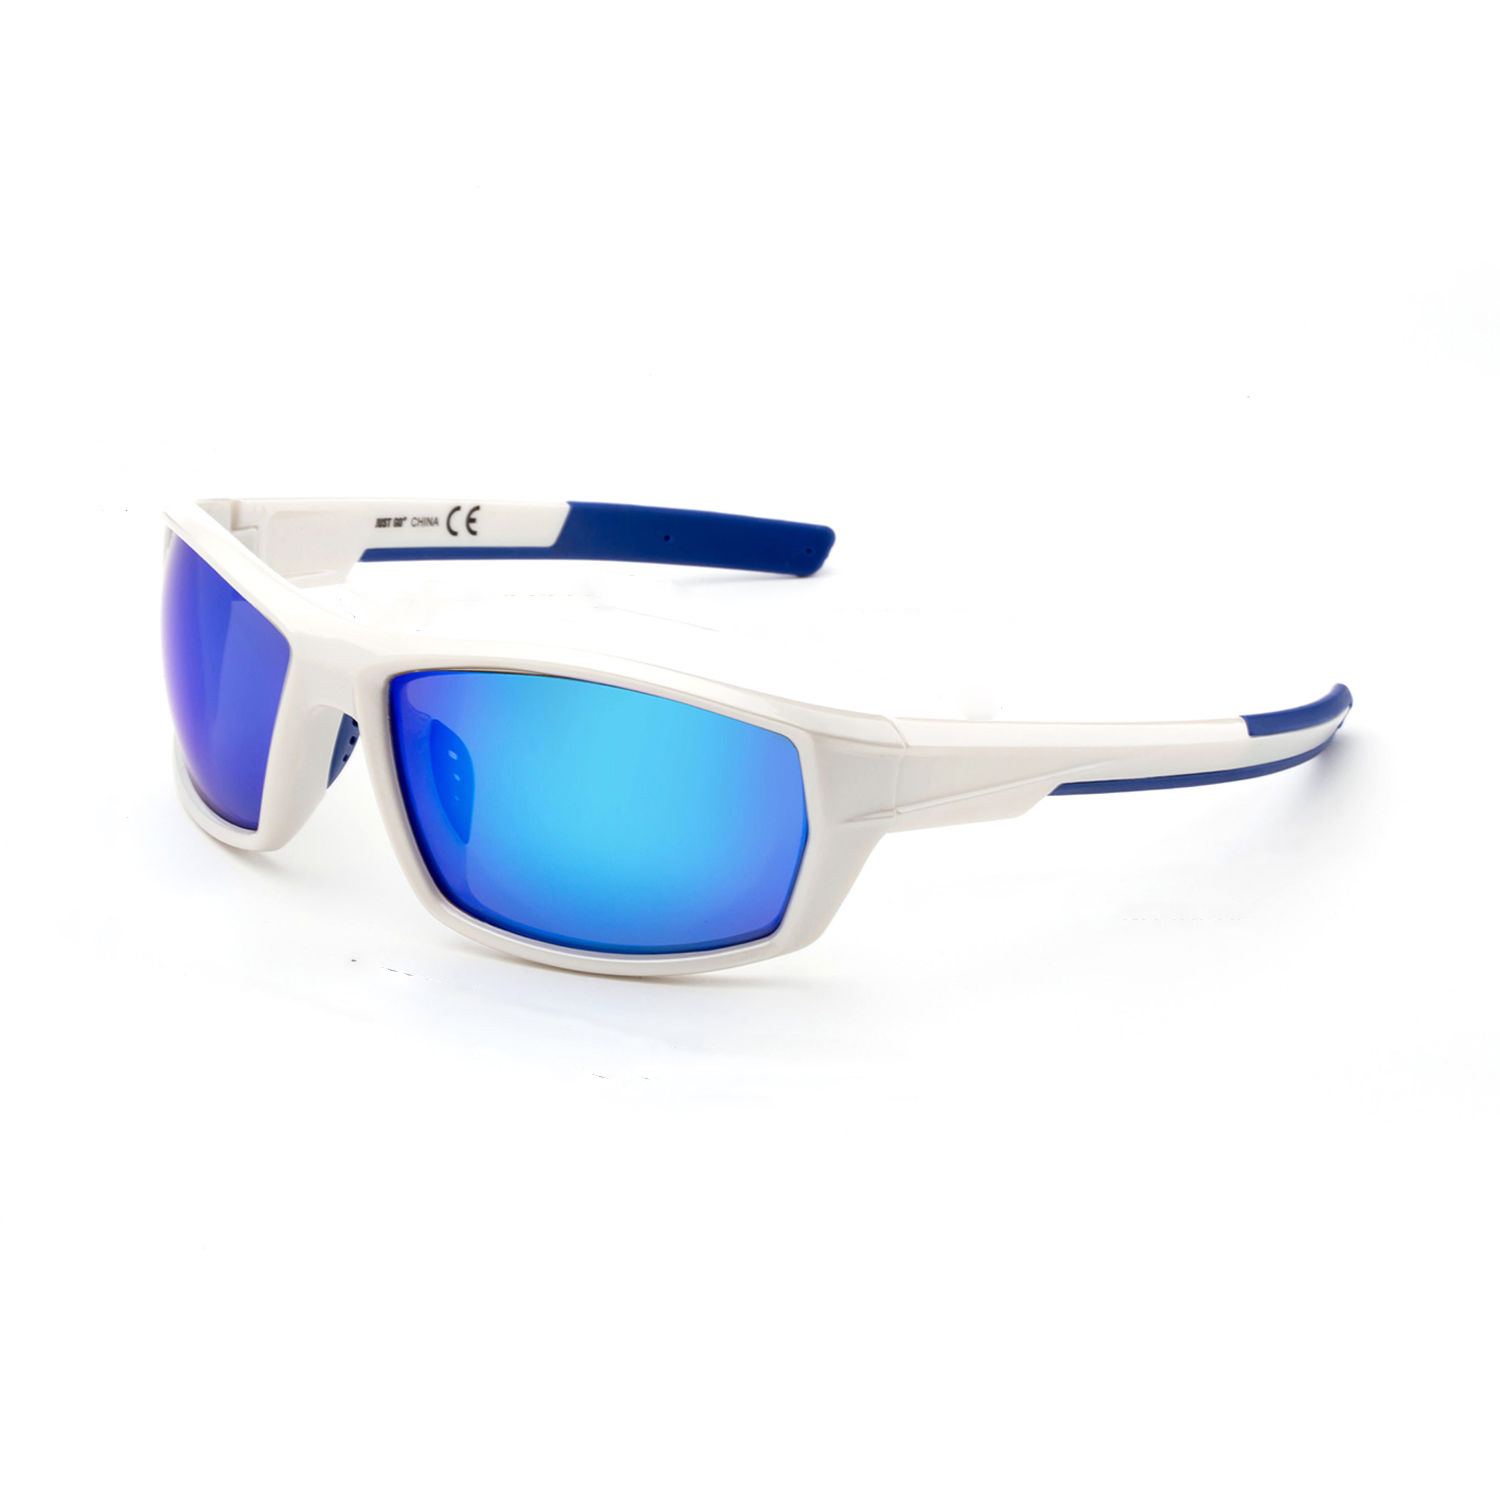 JUST GO Men's Polarized Lens Sports Sunglasses for Cycling Riding Baseball Running Golf, White, Revo Blue - image 2 of 7